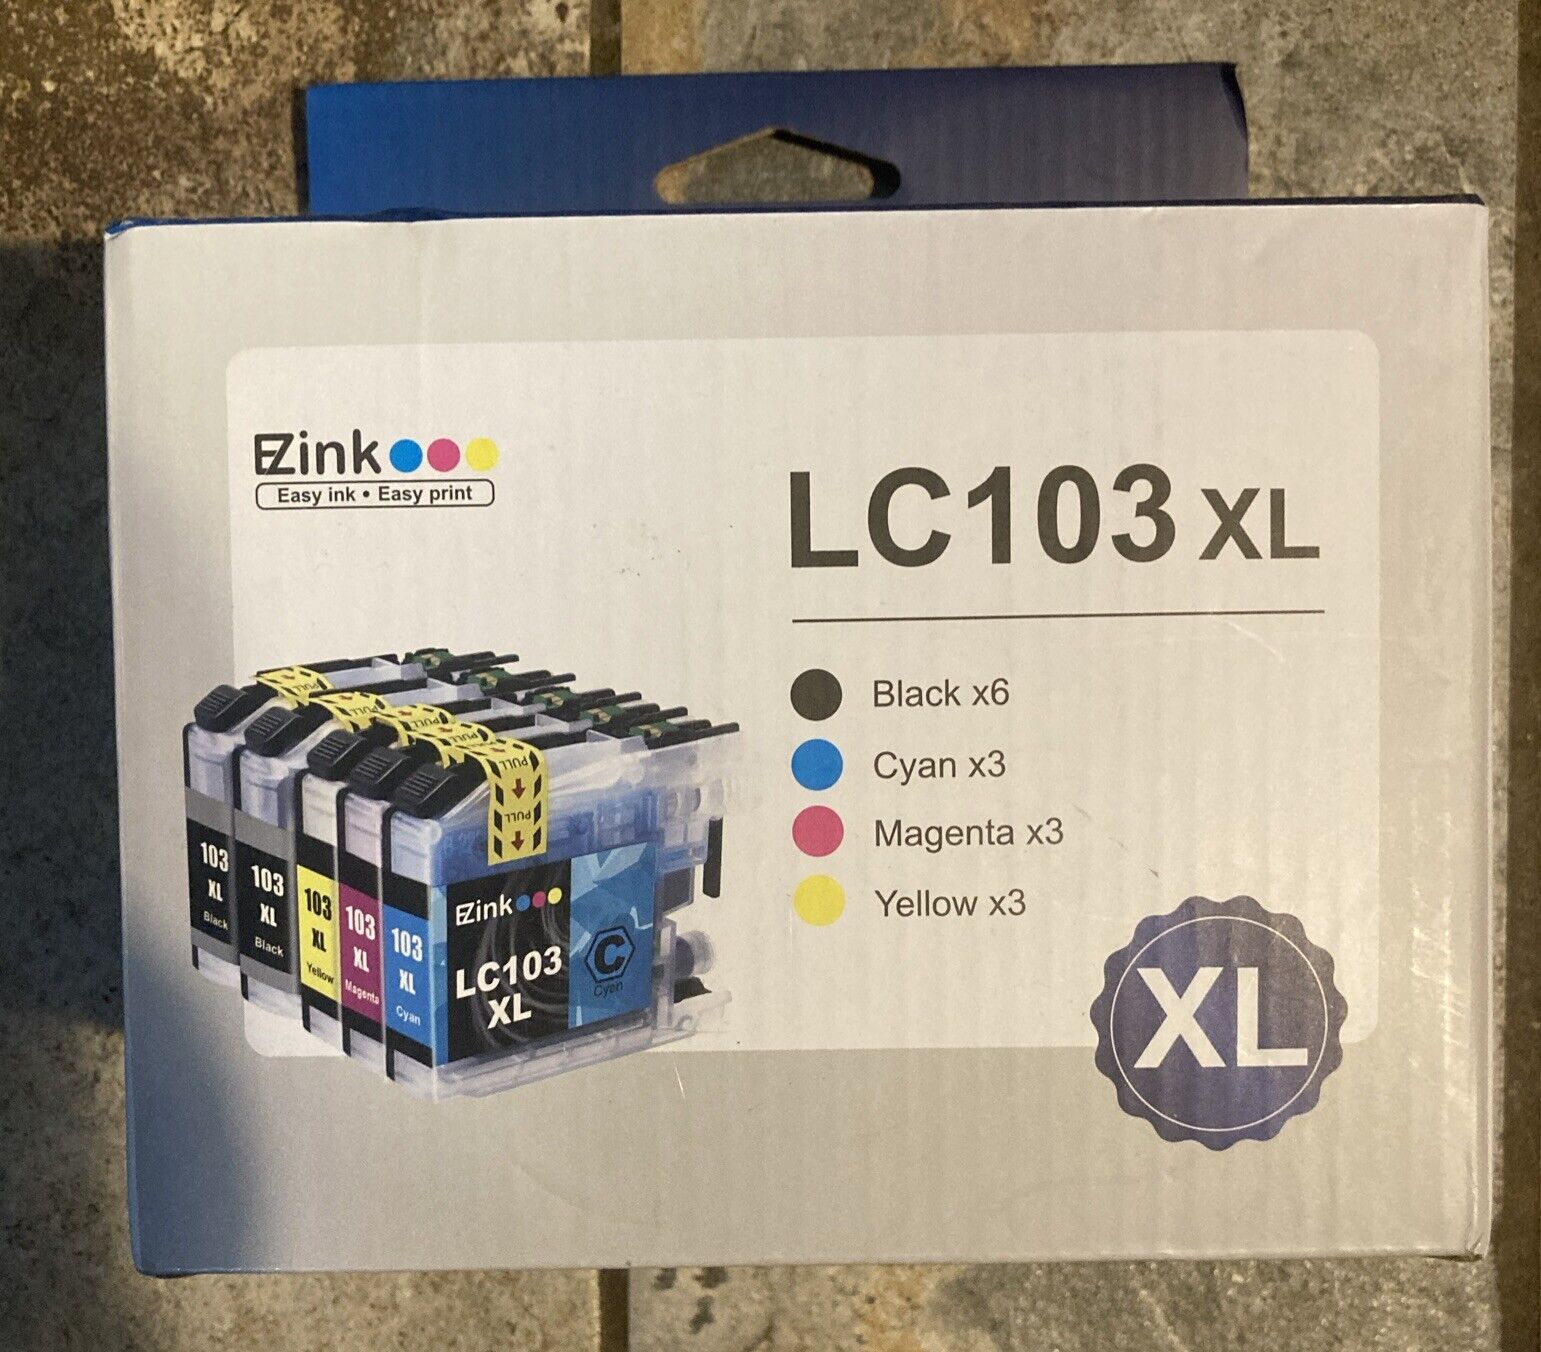 EZink Ink Cartridge LC103xL 15 Pack 6 Blk 3 Cyan 3 Magenta 3 Yellow - New in Box